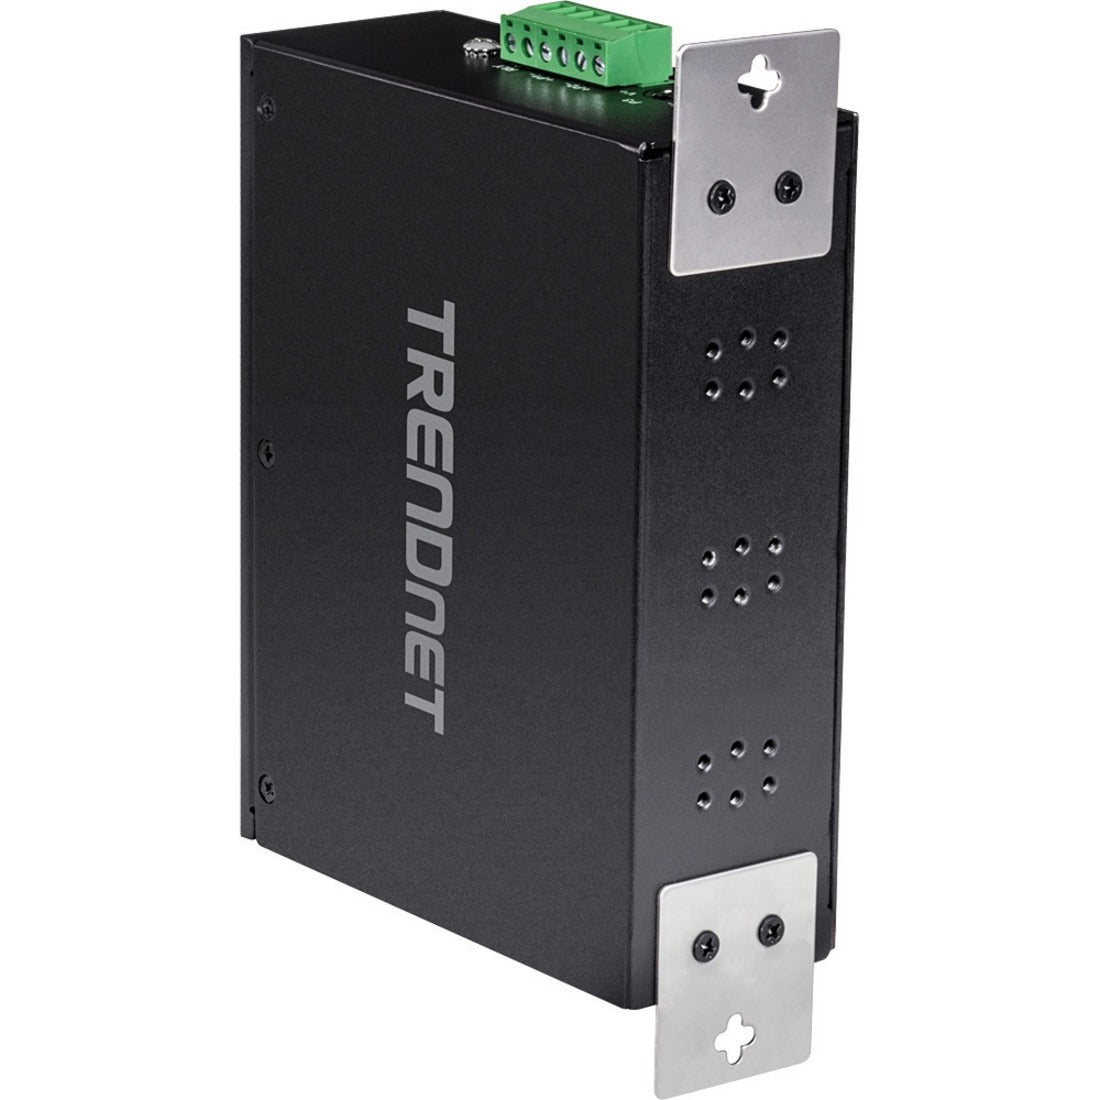 TRENDnet TI-PG162 16-Port Industrial Gigabit PoE, Hardened Unmanaged Switch, Lifetime Protection